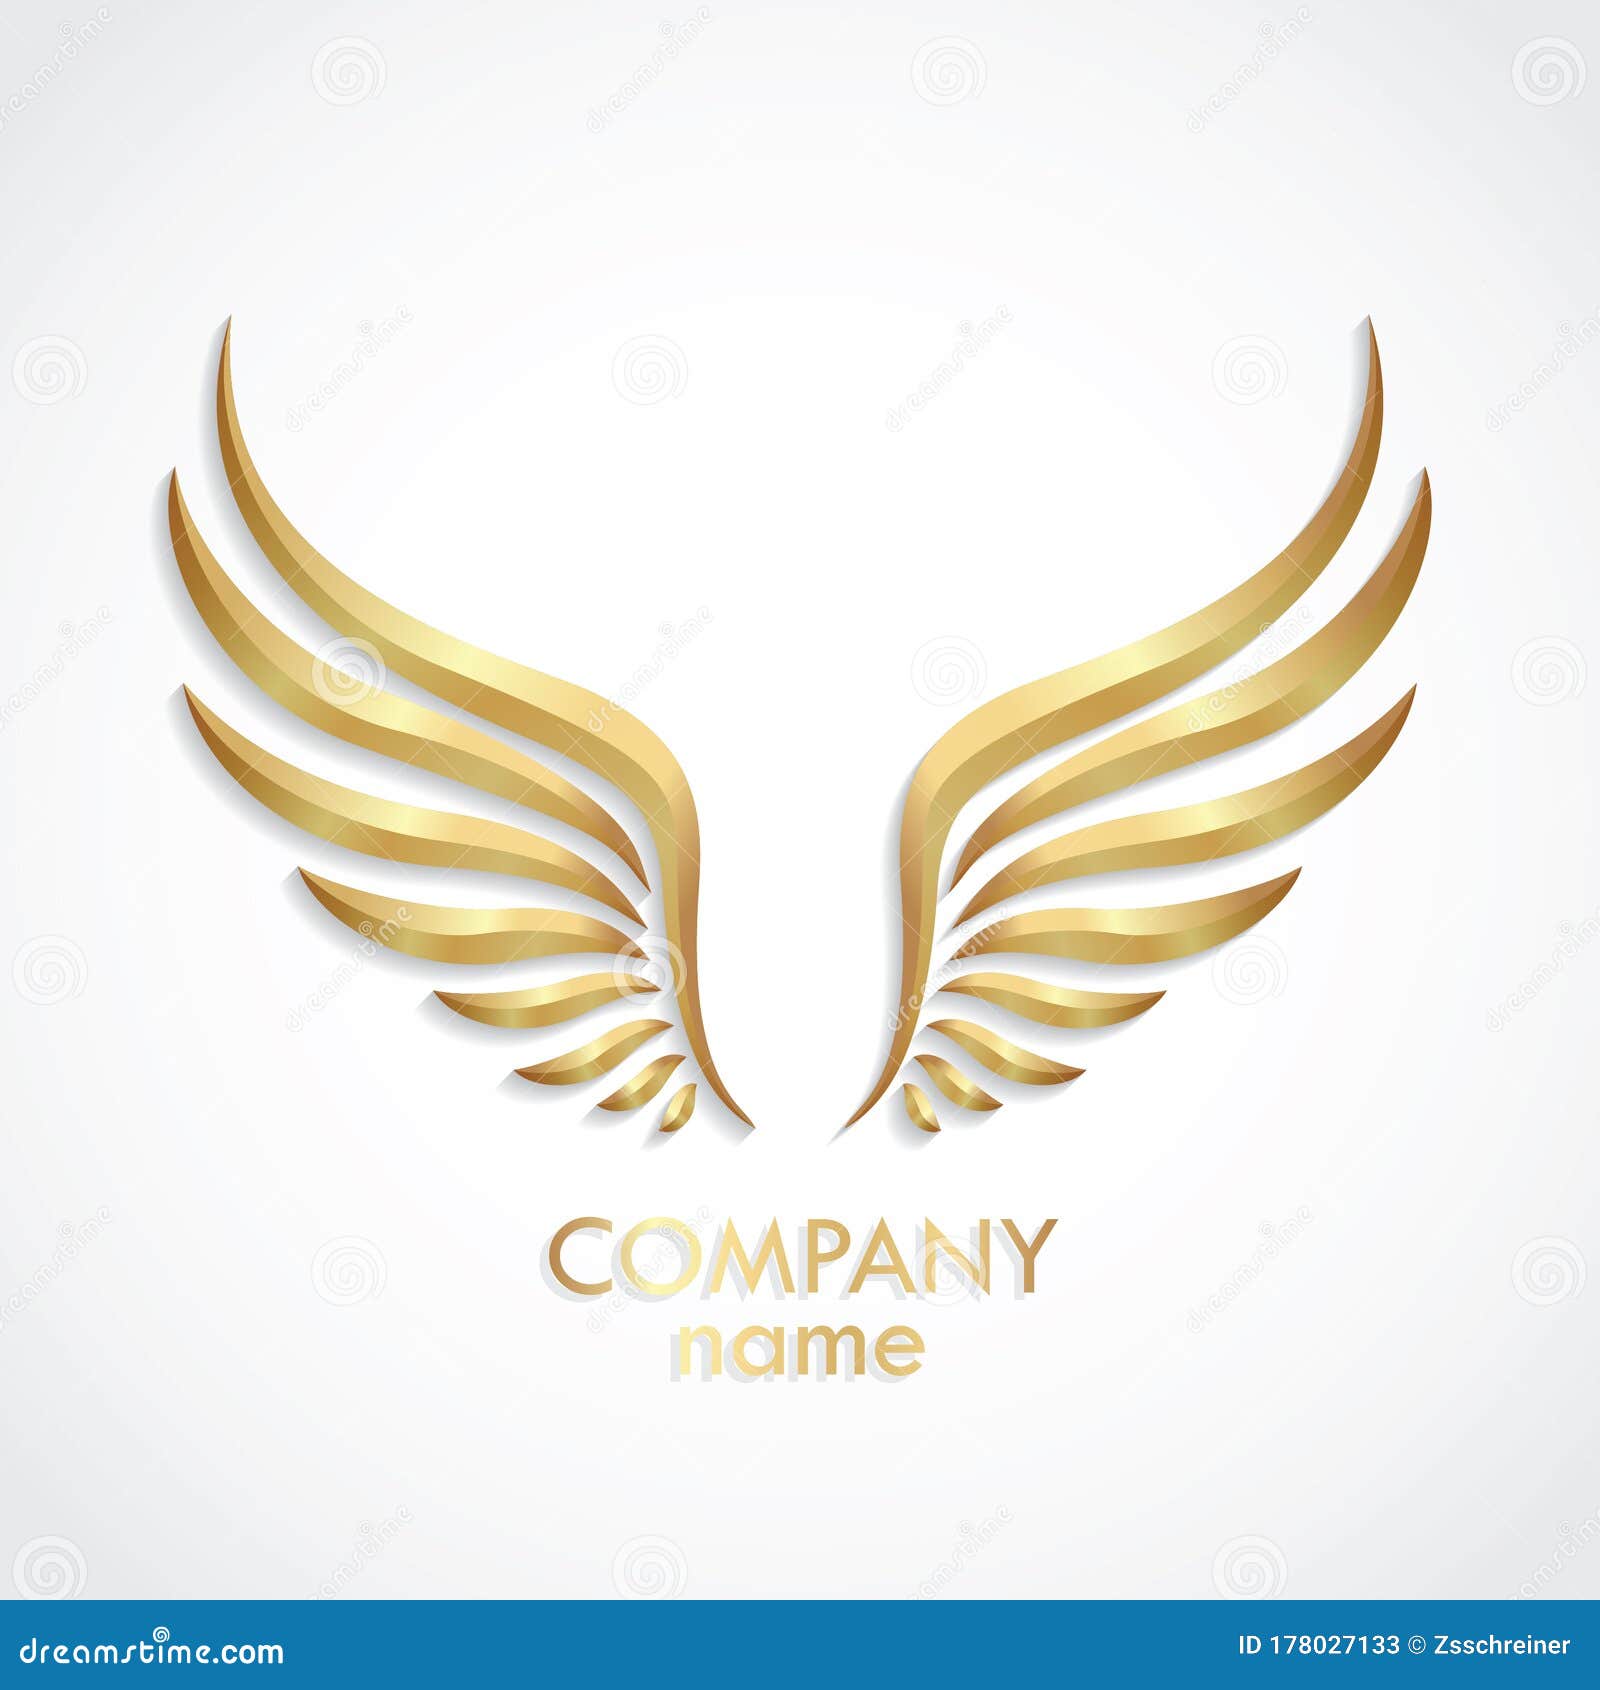 3d golden shiny metal wings logo 